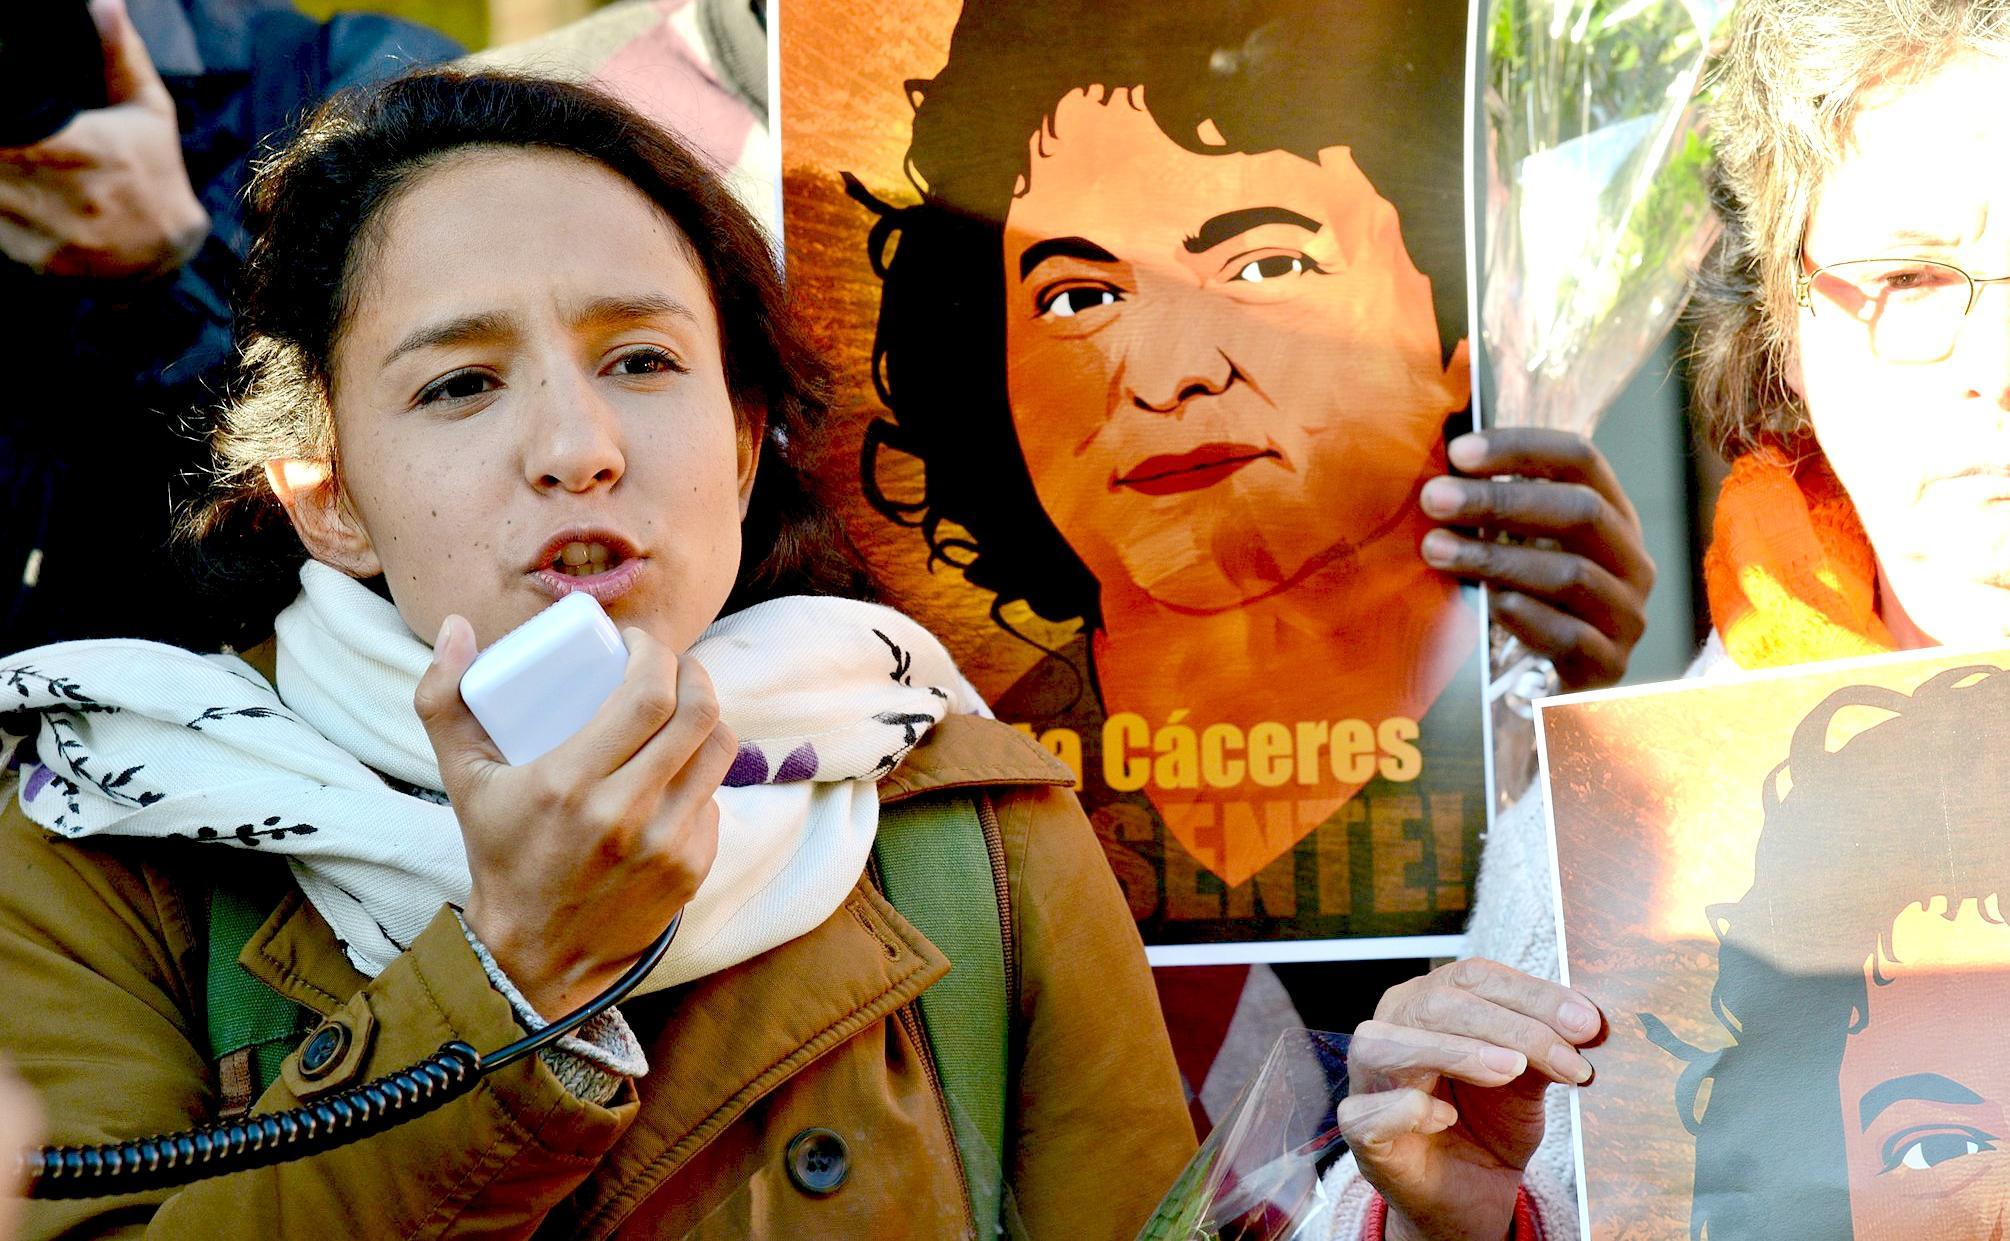 Berta Zúñiga Cáceres, daughter of Berta Cáceres, speaks at a demonstration in Washington, D.C.